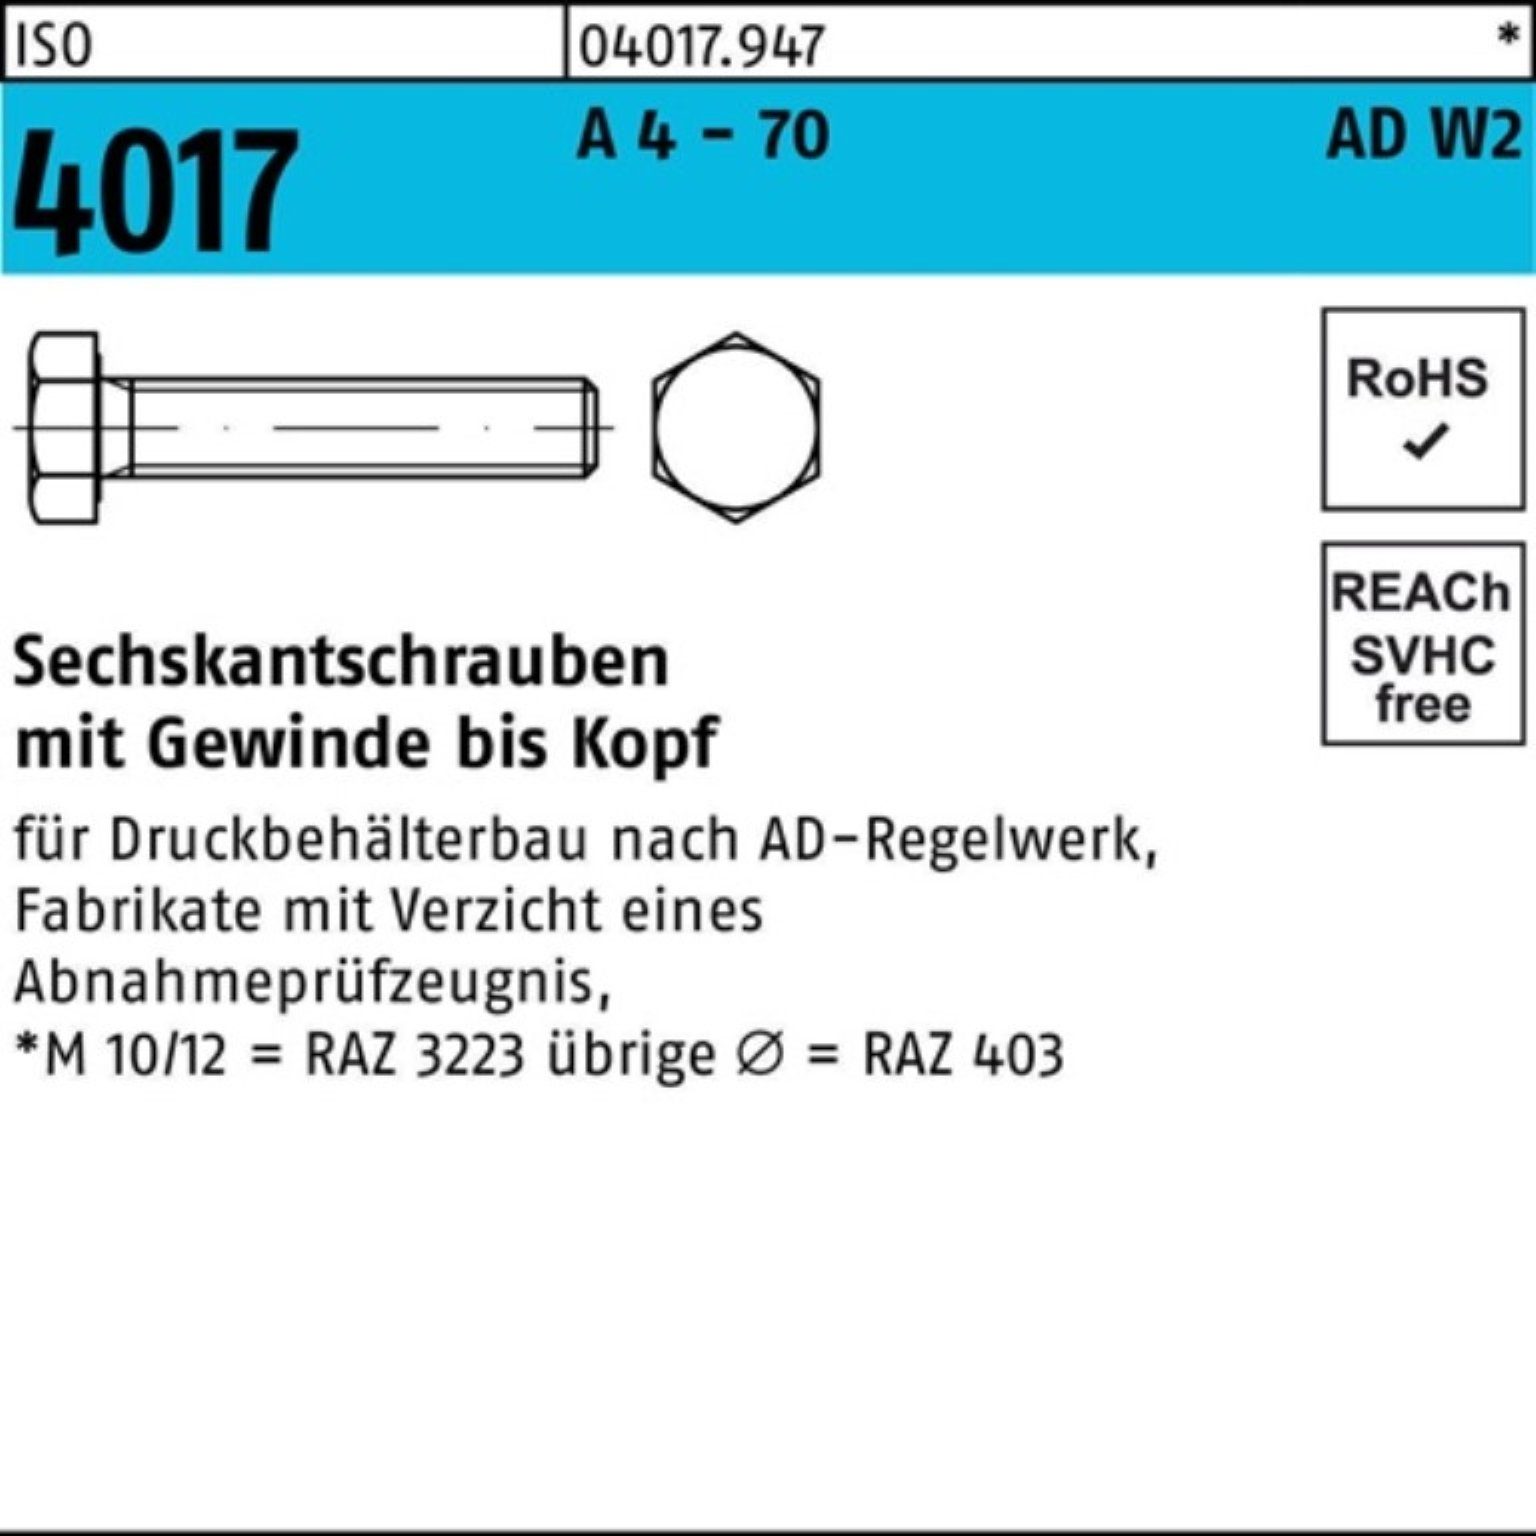 Bufab Sechskantschraube 100er Pack Sechskantschraube ISO 4017 VG M16x 45 A 4 - 70 AD-W2 25 St | Schrauben